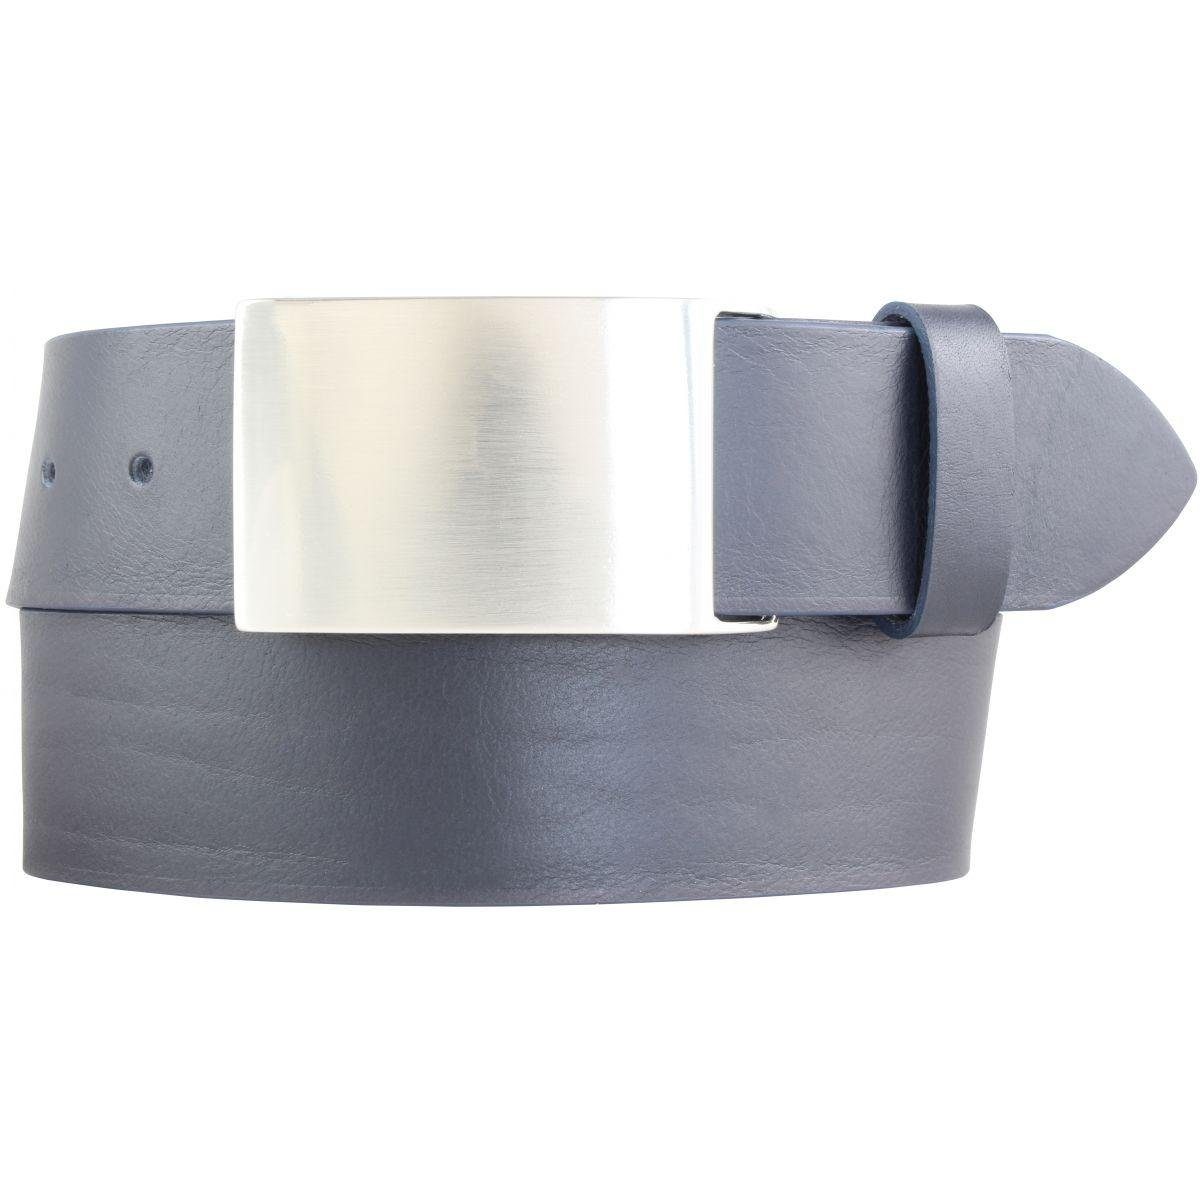 BELTINGER Ledergürtel Gürtel aus Vollrindleder 4,5 cm - Jeans-Gürtel für Herren 45mm - Jeans Marine, Silber